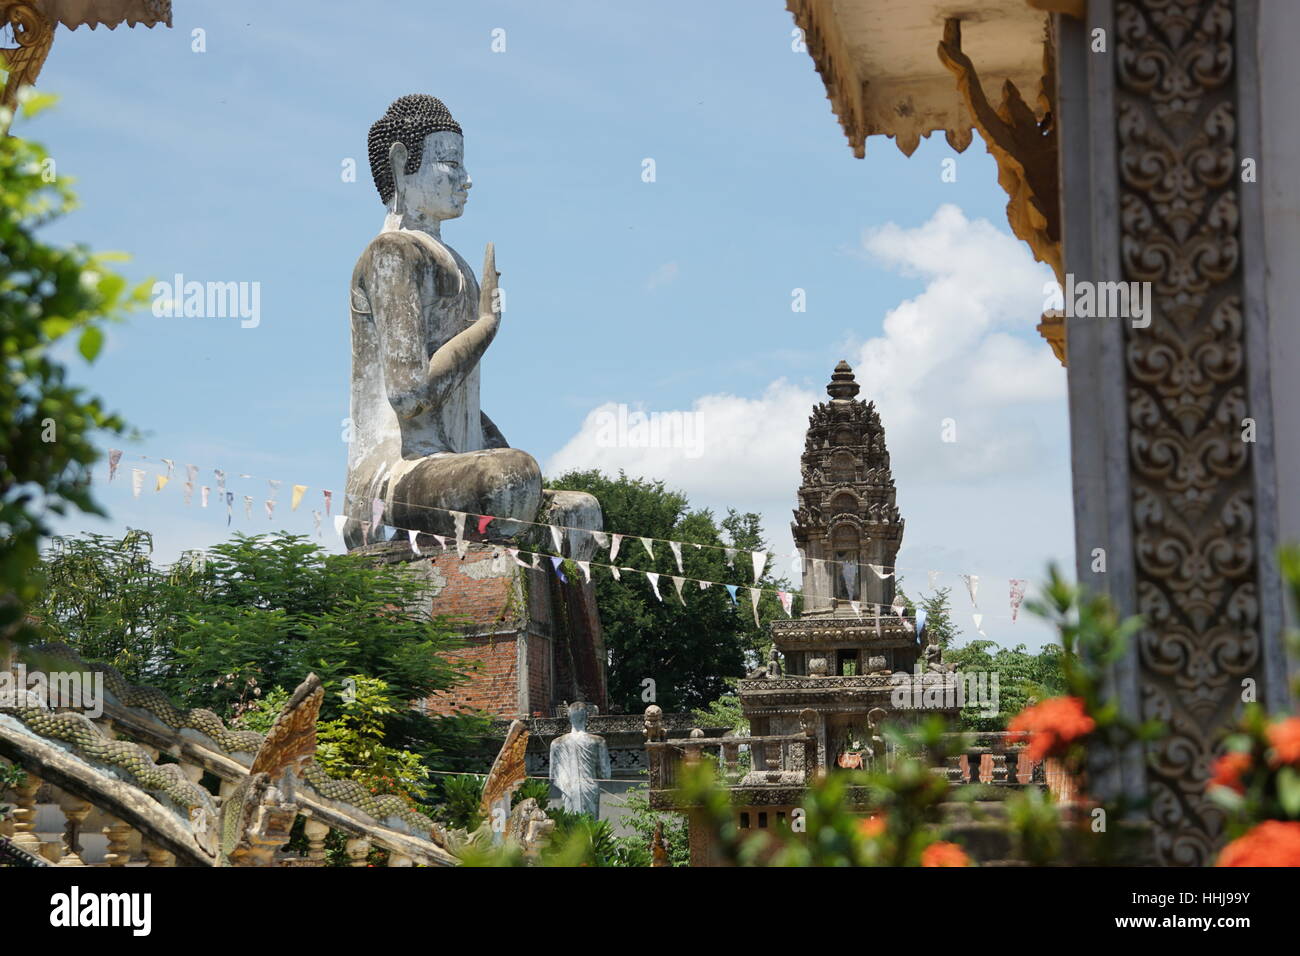 Large Statue of the Buddha at Ek Phnom Temple, Battambang, Cambodia Stock Photo